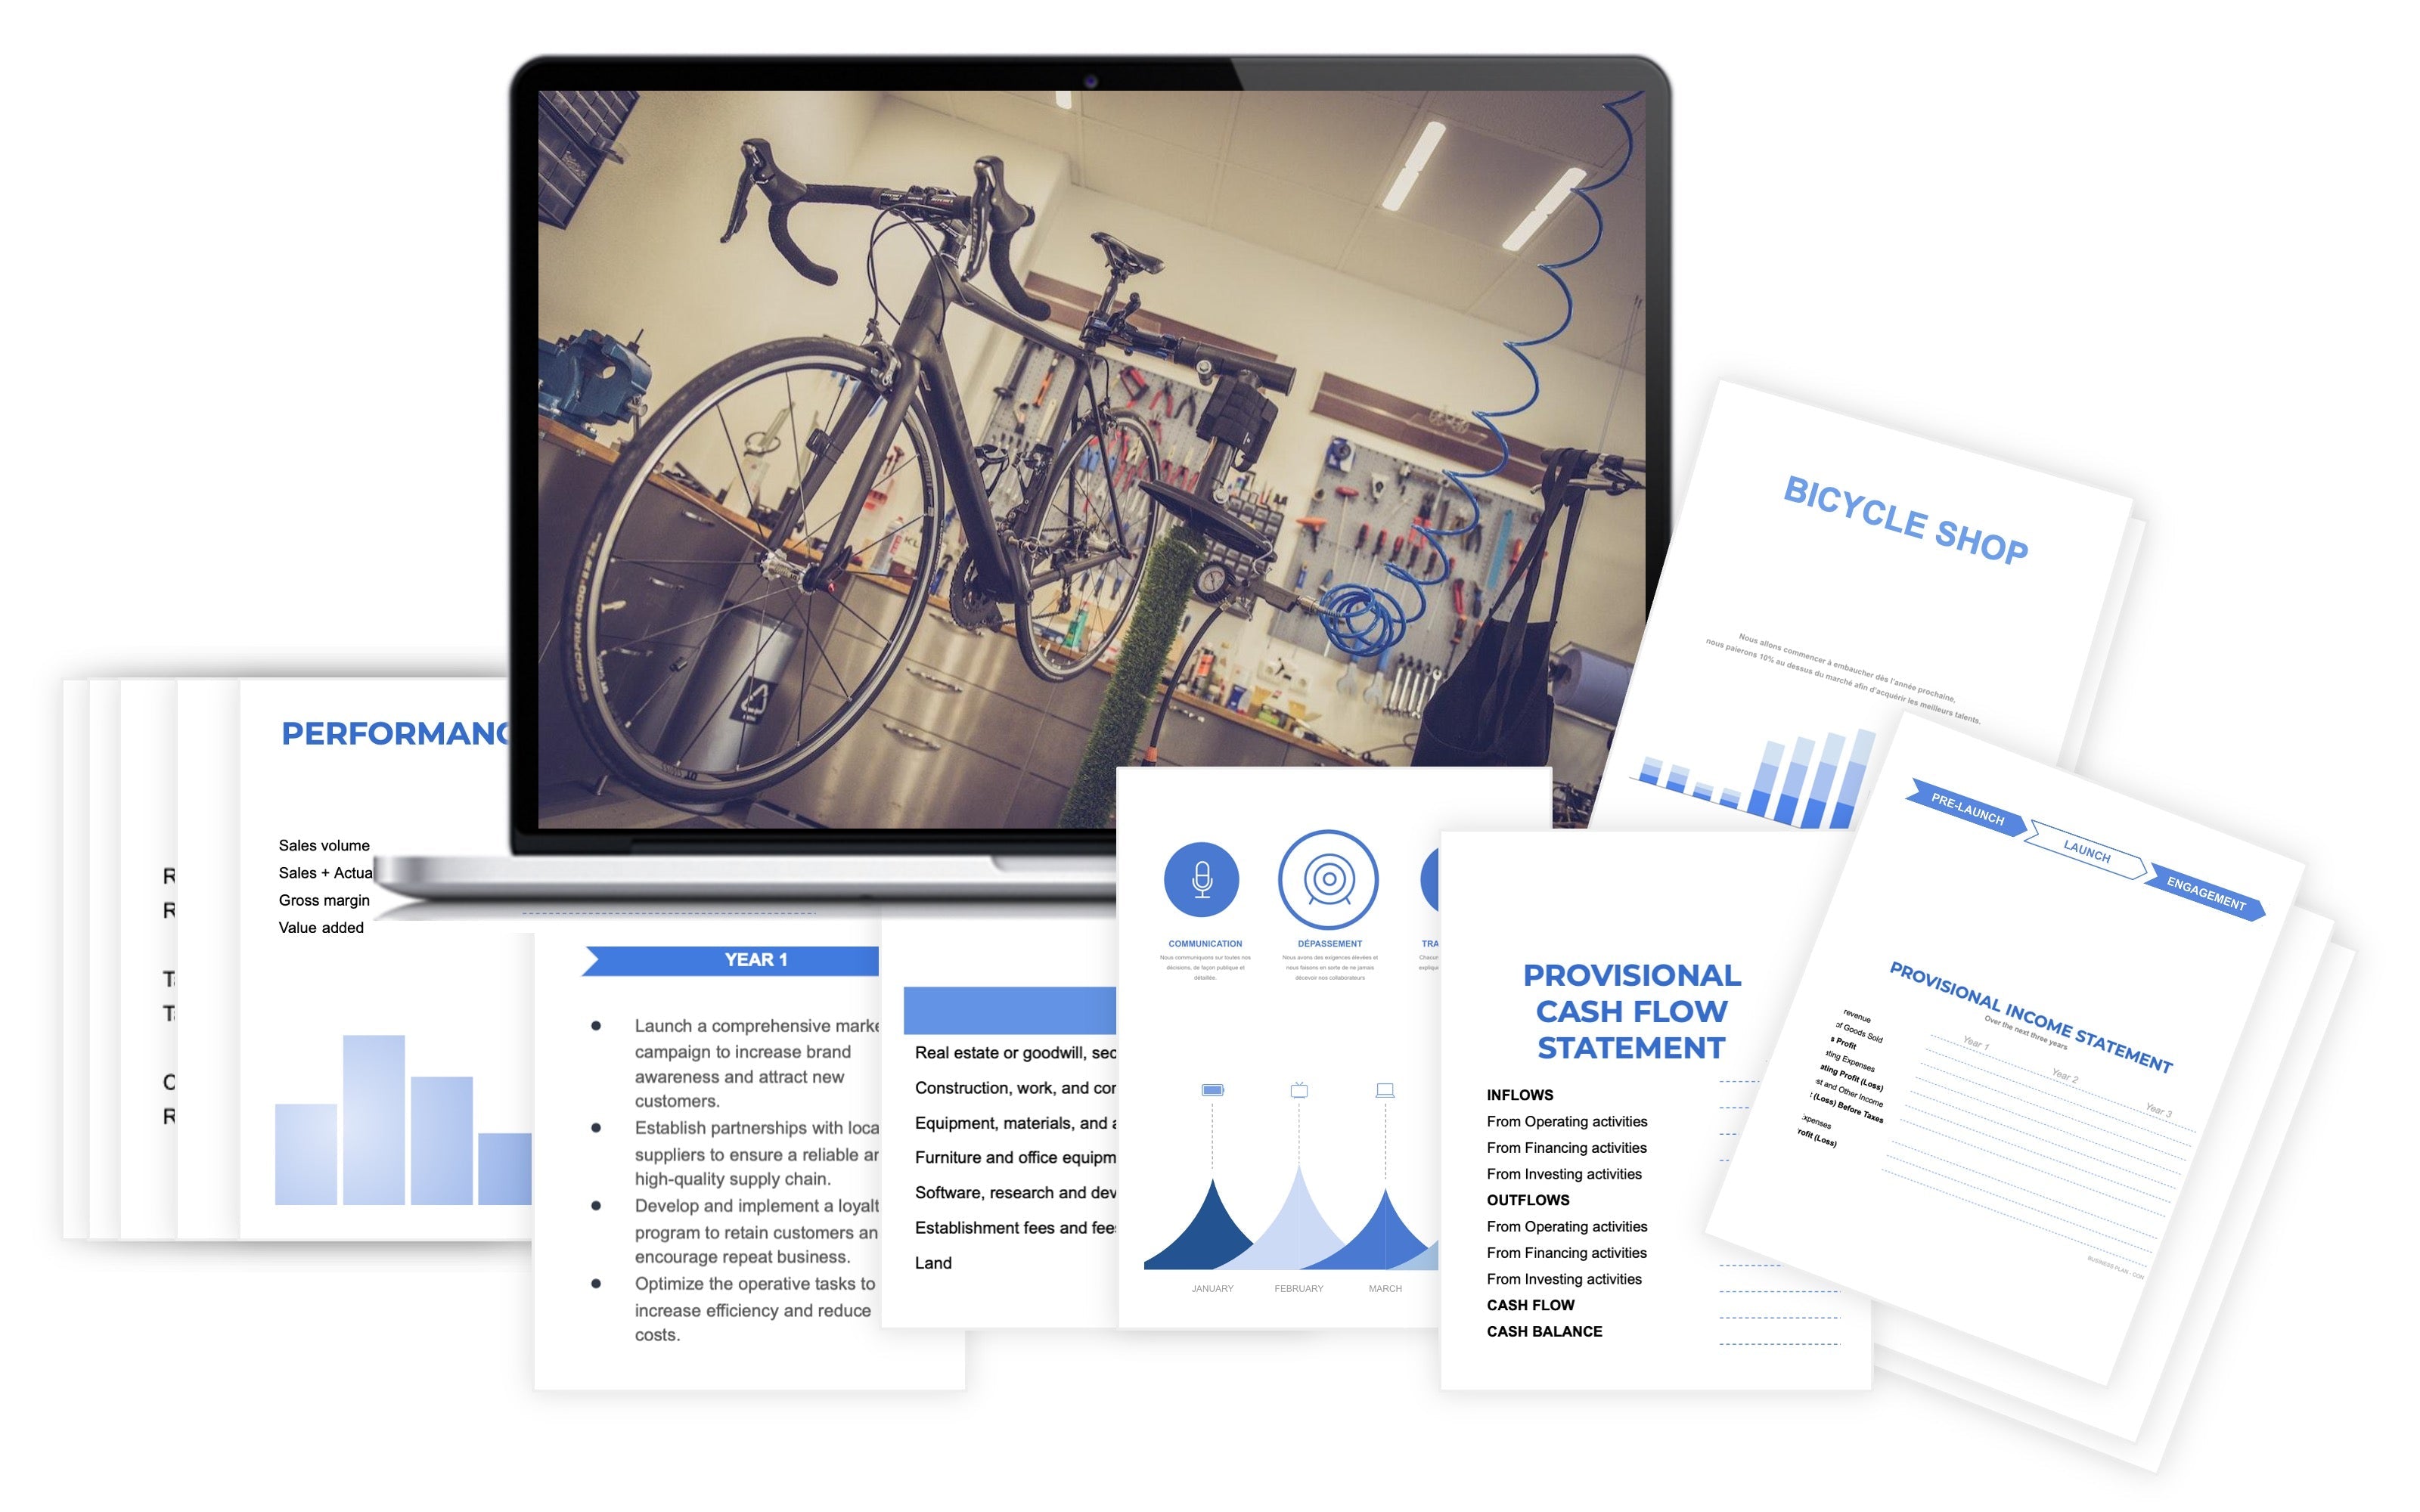 Bicycle Shop Financial Plan